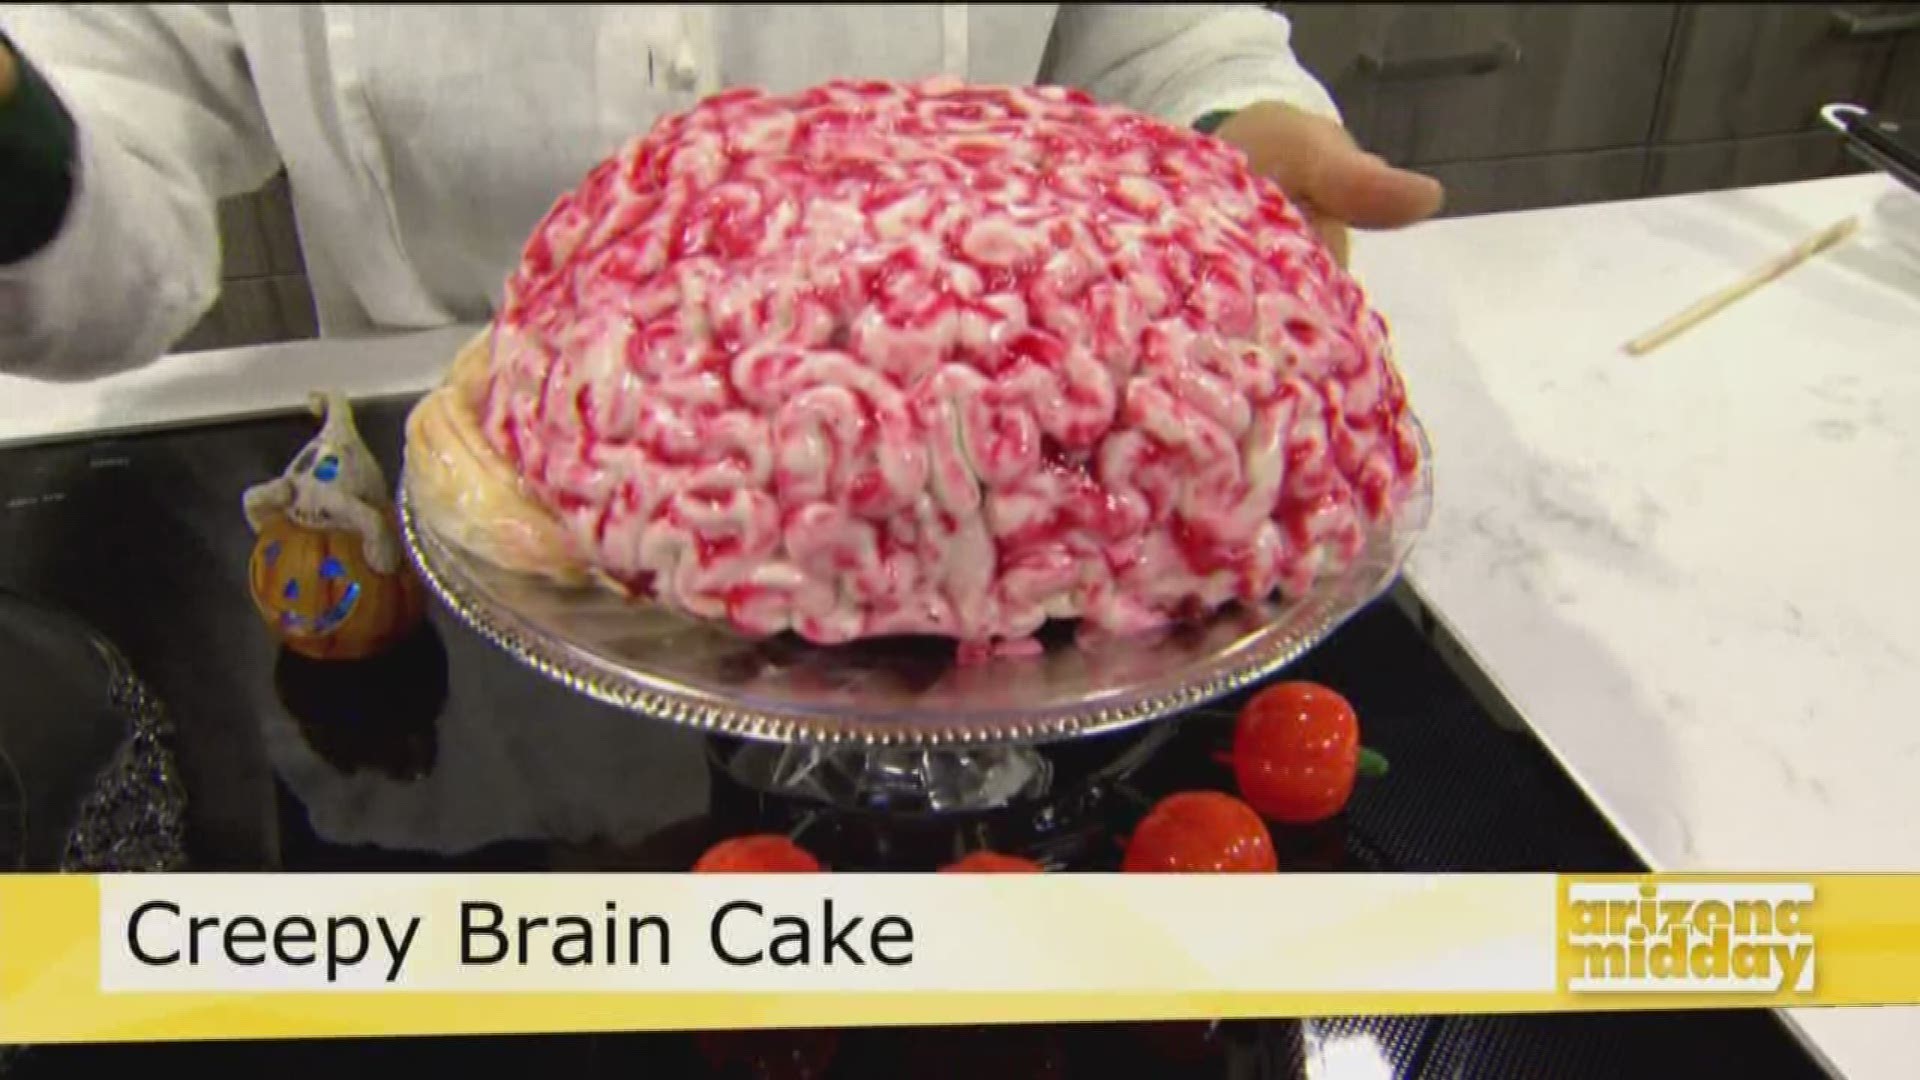 Zombie Brain Cake: A Halloween Dessert - Dark Chocolate Cake